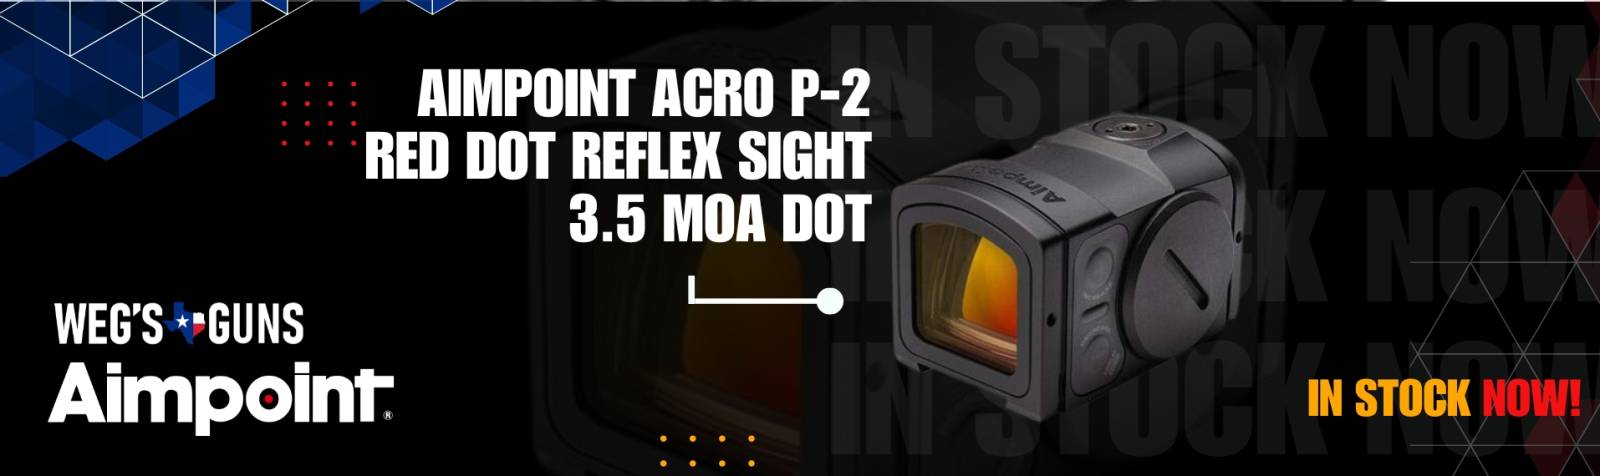 1Aimpoint ACRO P-2 Red Dot Reflex Sight 3.5 MOA Dot